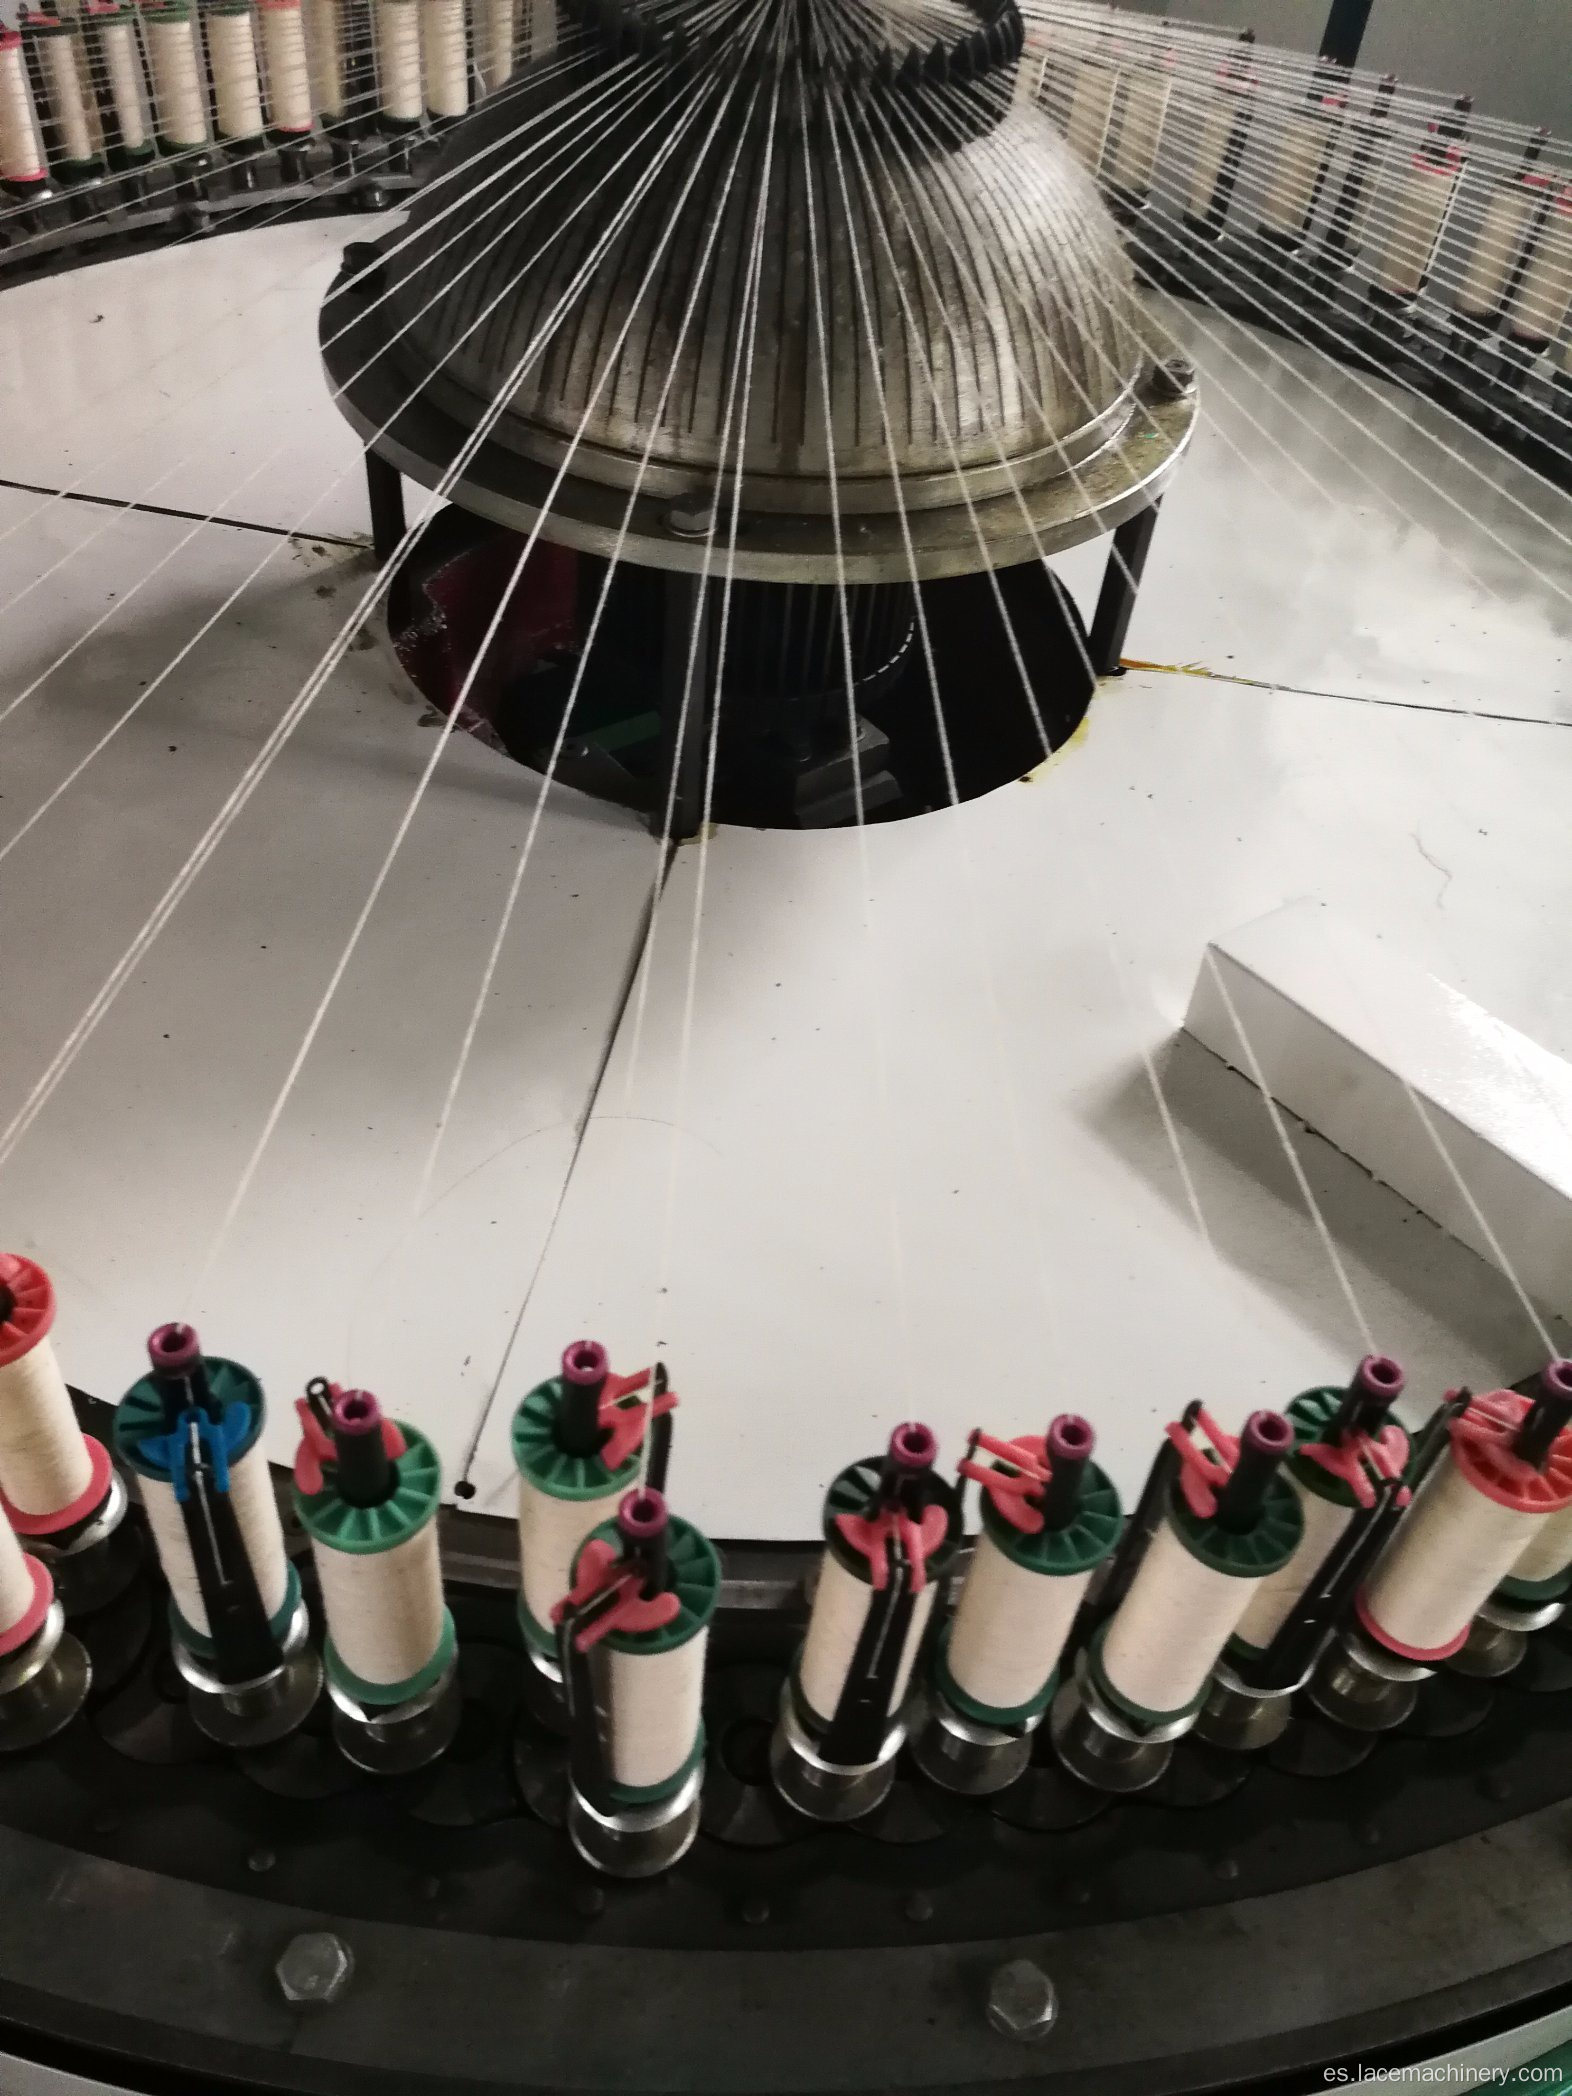 Máquina de bordado computarizada de encaje Jacquard de hilo de algodón